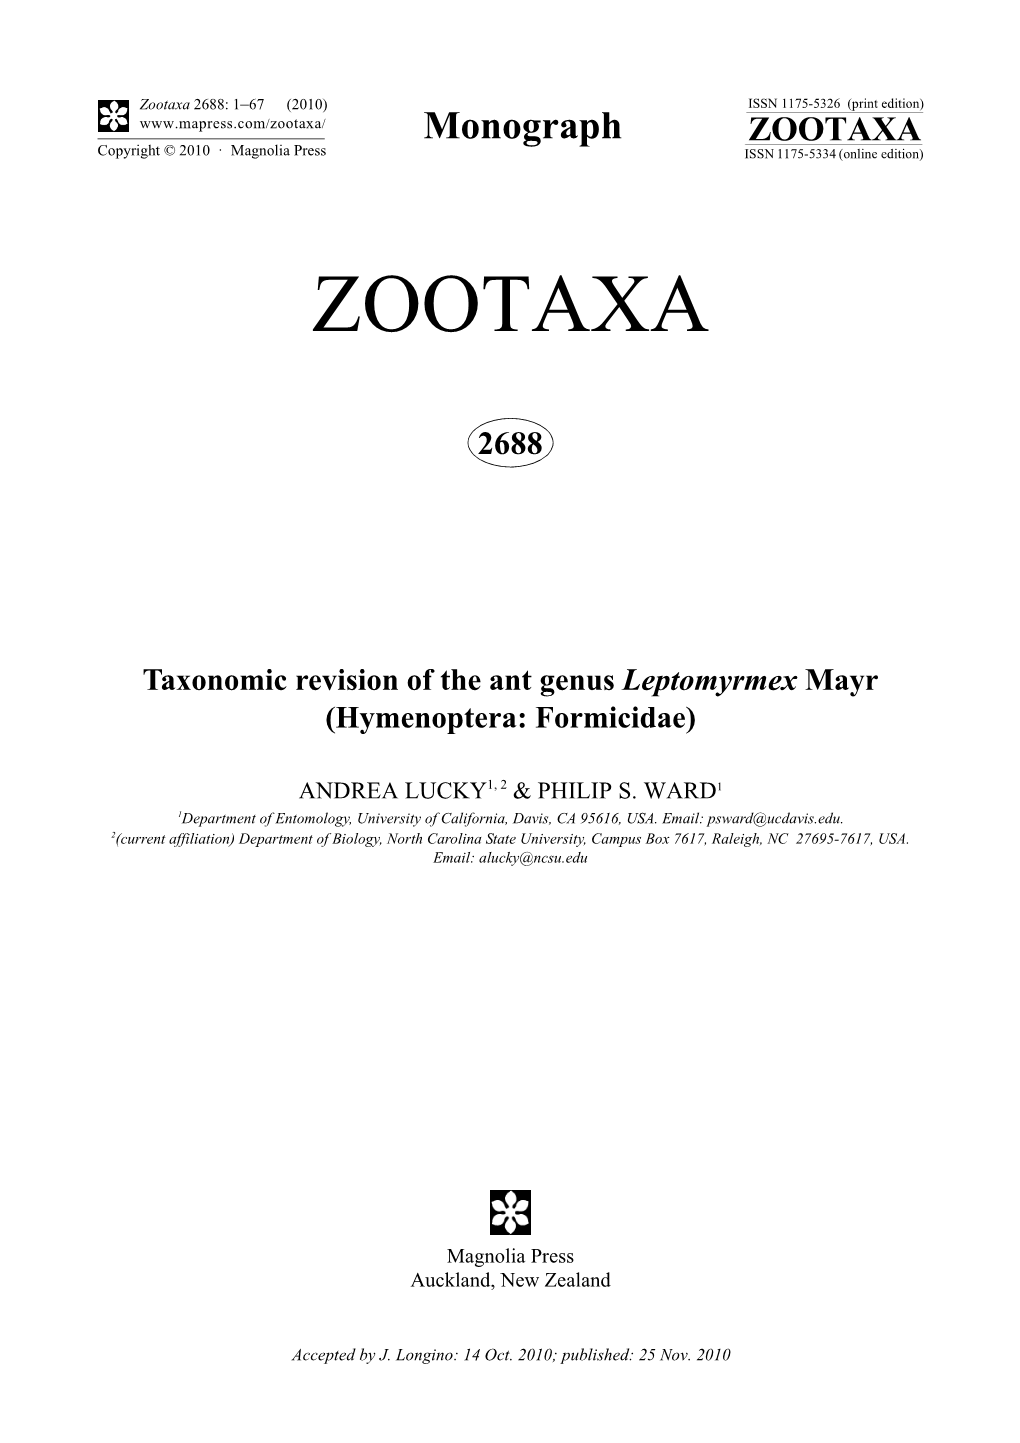 Taxonomic Revision of the Ant Genus Leptomyrmex Mayr (Hymenoptera: Formicidae)